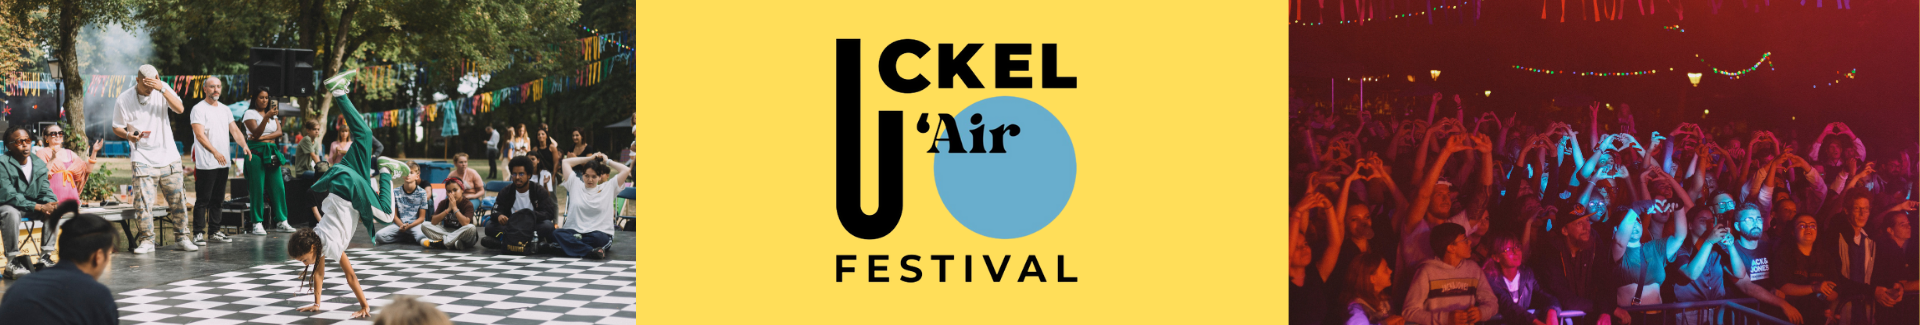 Uckel’Air